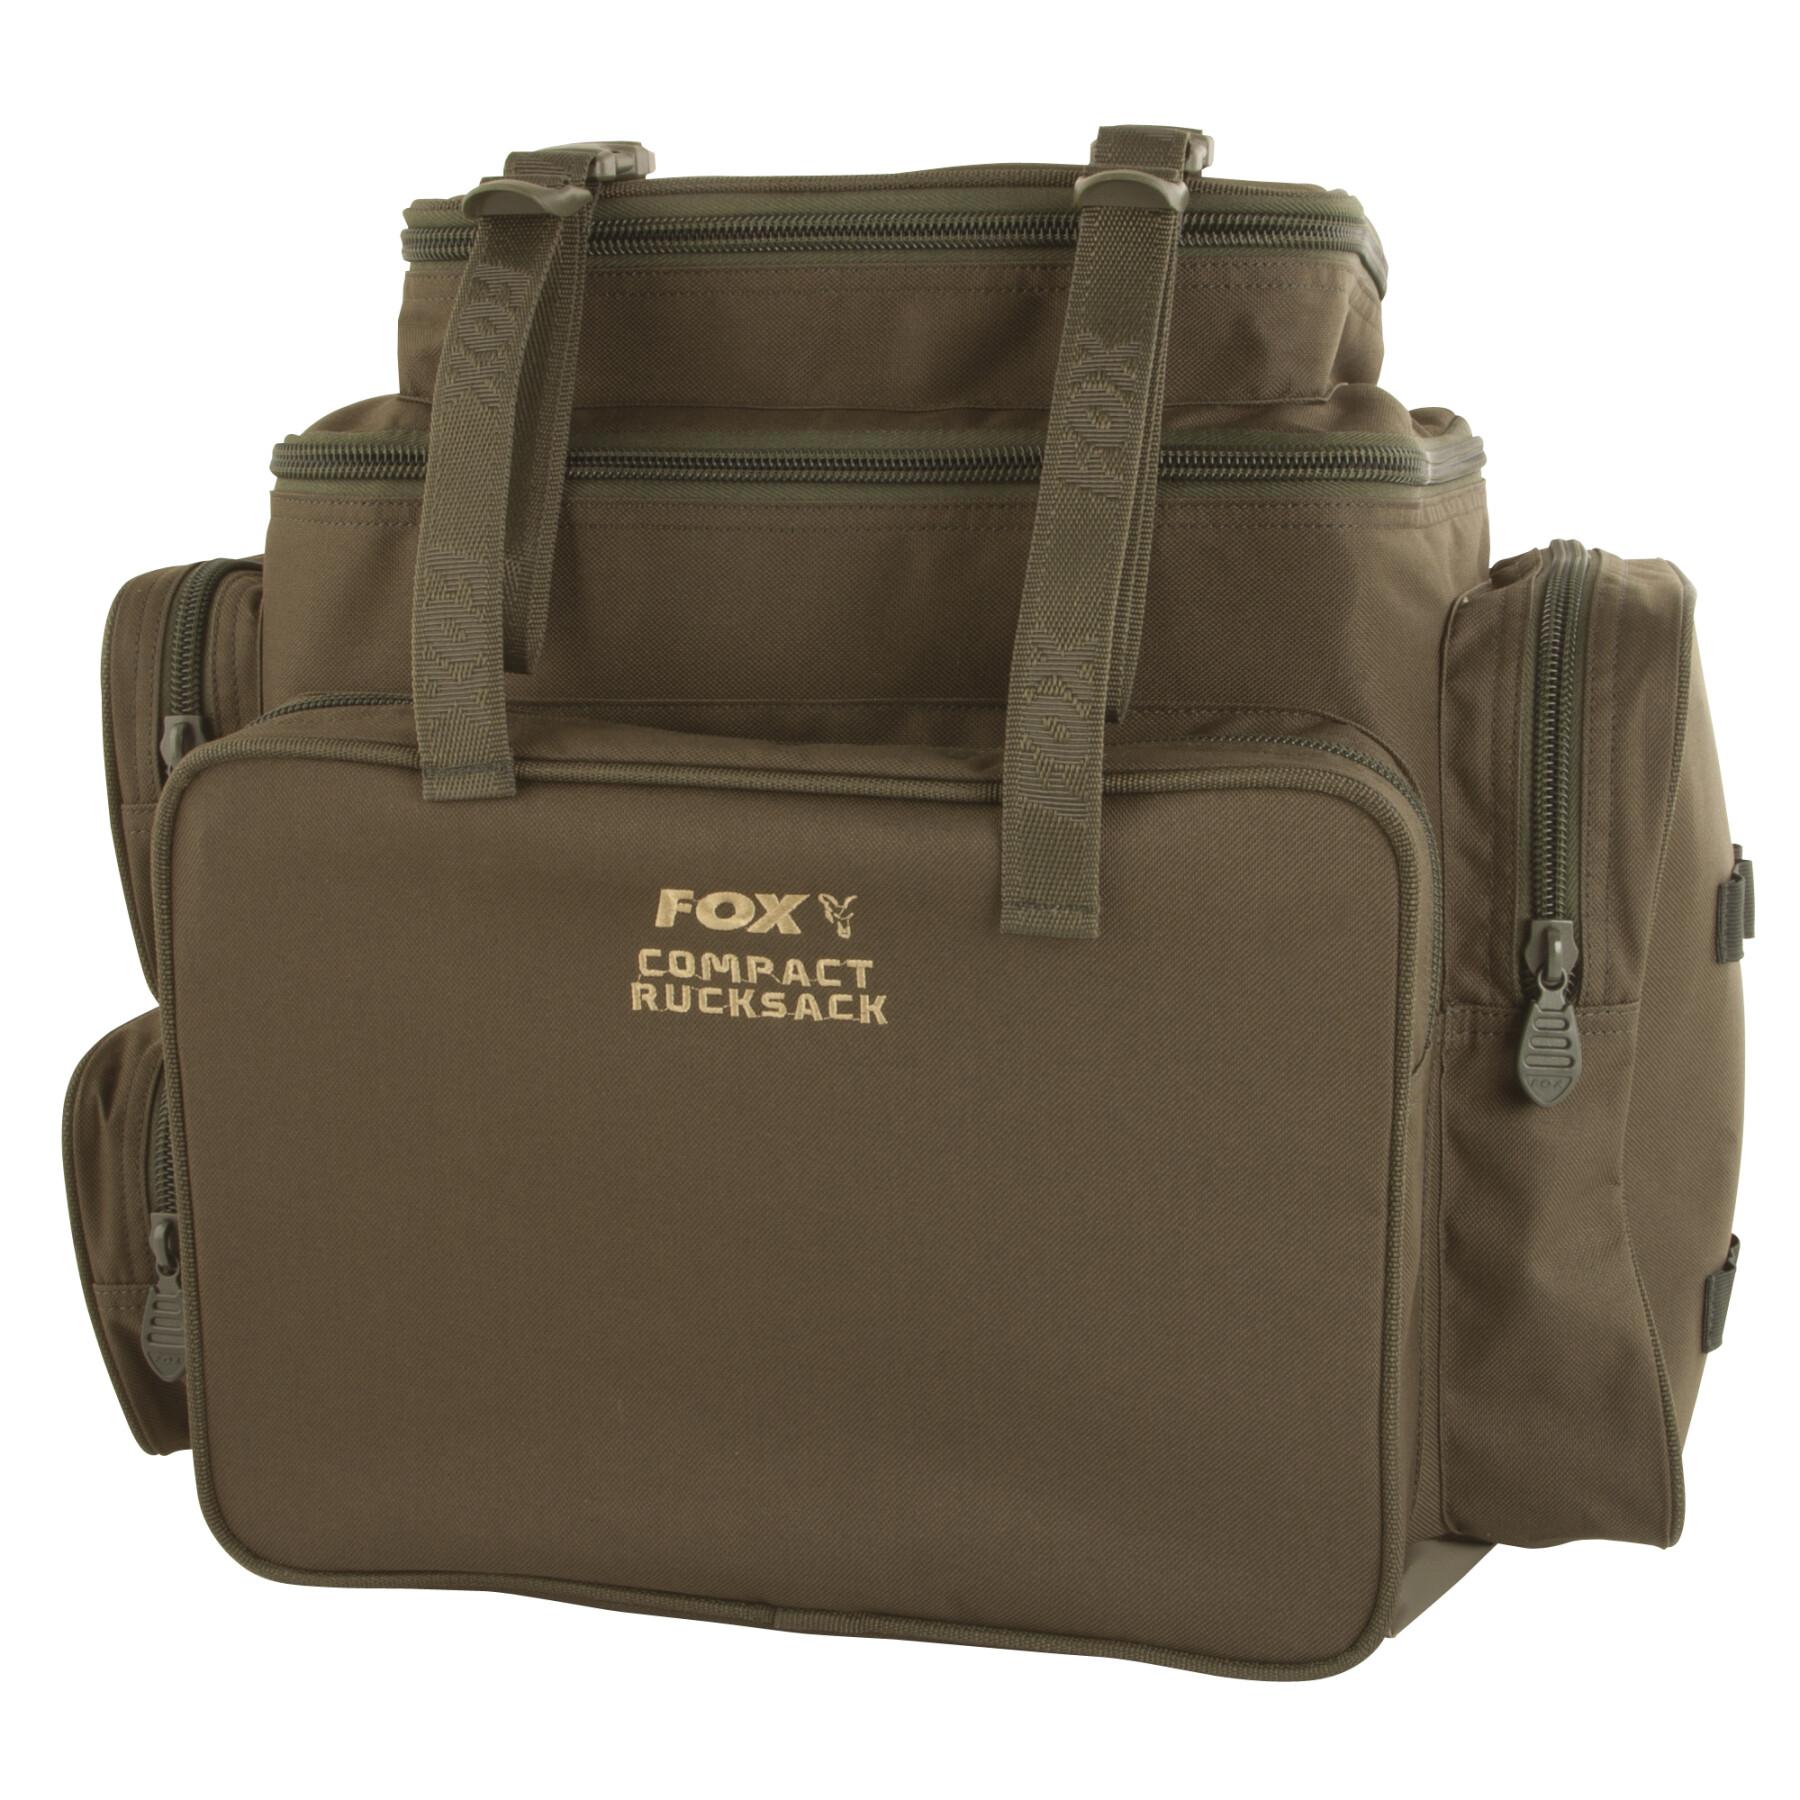 Tas Fox Specialist Compact Rucksack